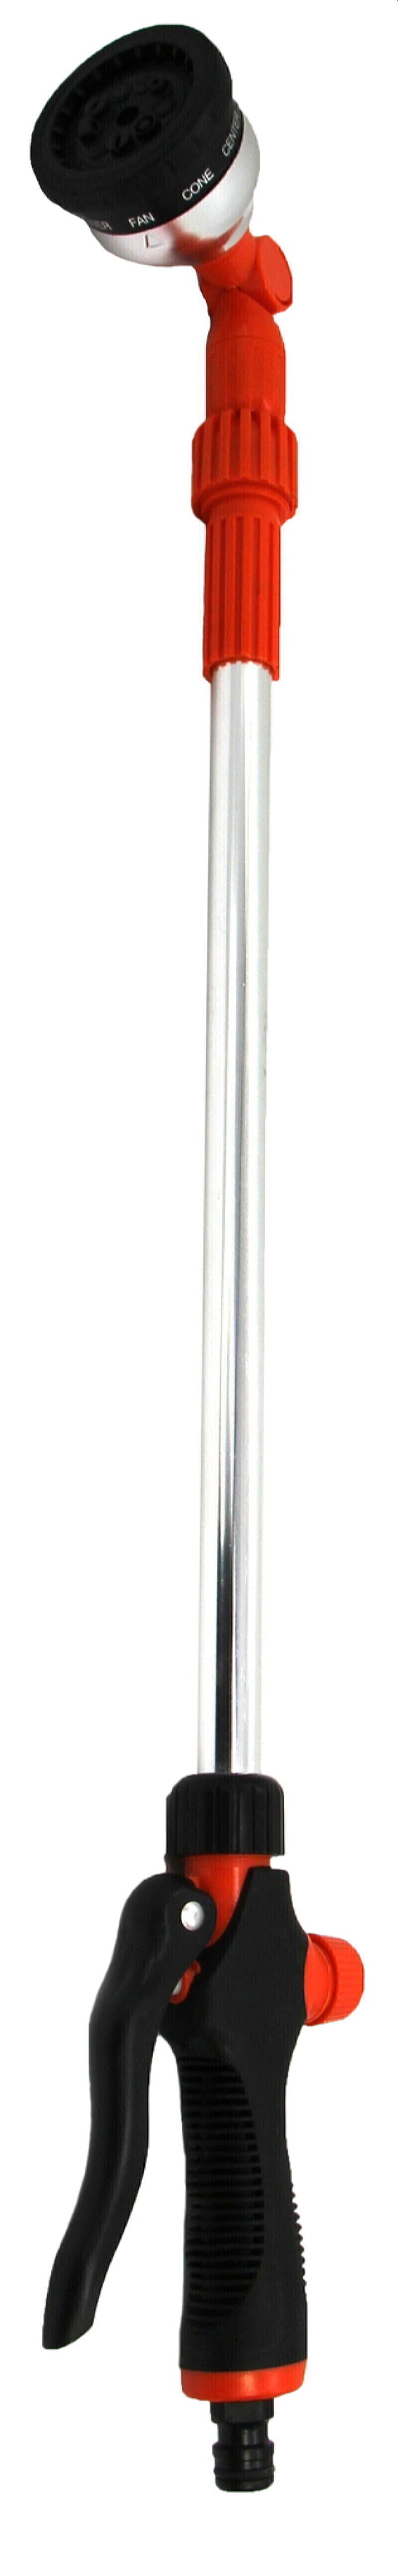 SVK plast Душ телескопический 8-реж  на металл.основе